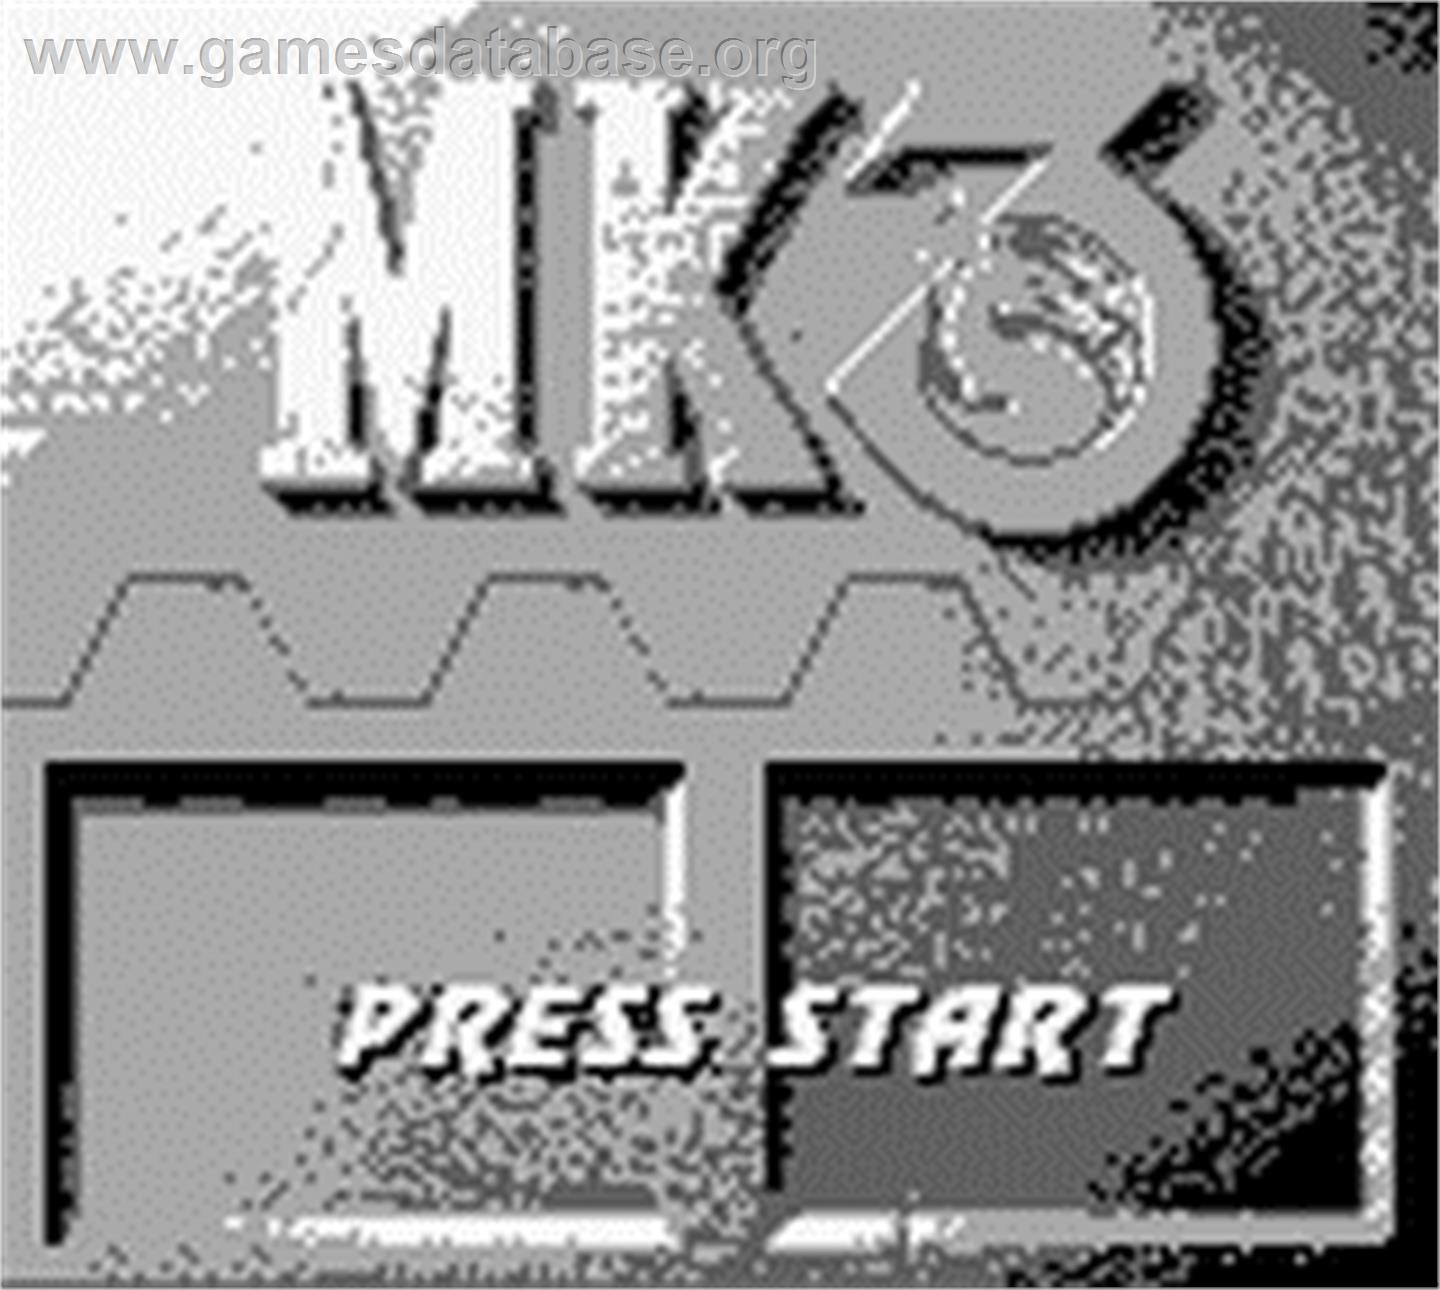 Mortal Kombat 3 - Nintendo Game Boy - Artwork - Title Screen